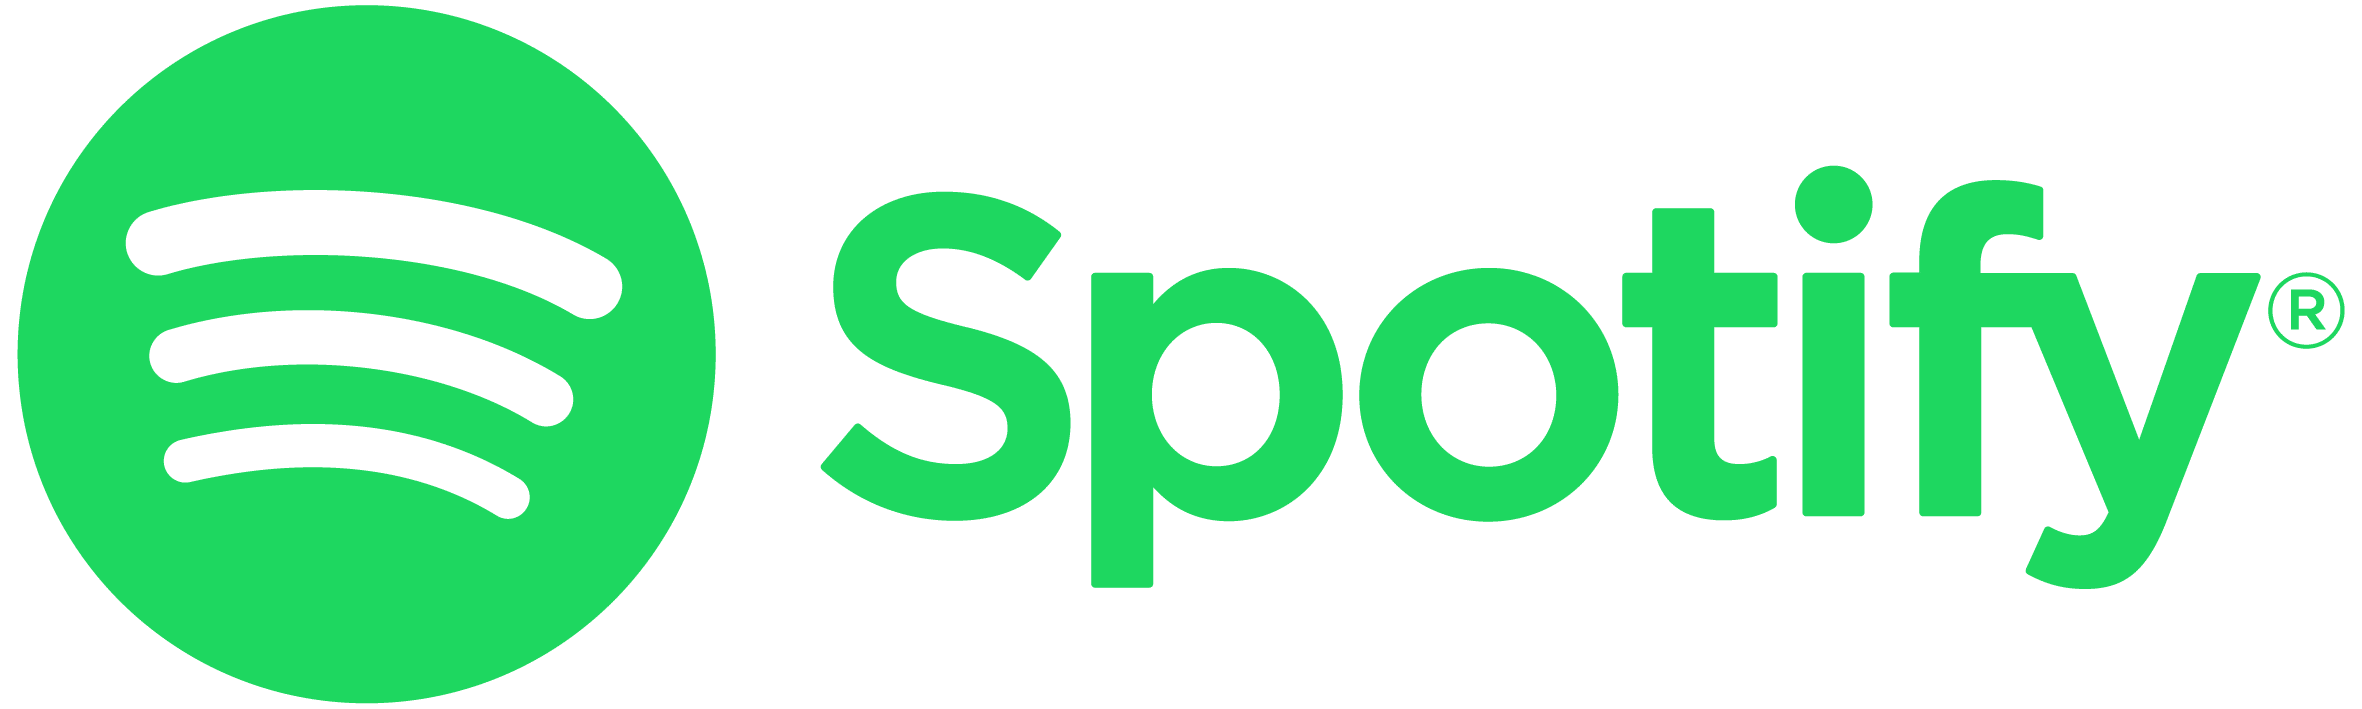 Spotify's green logotype